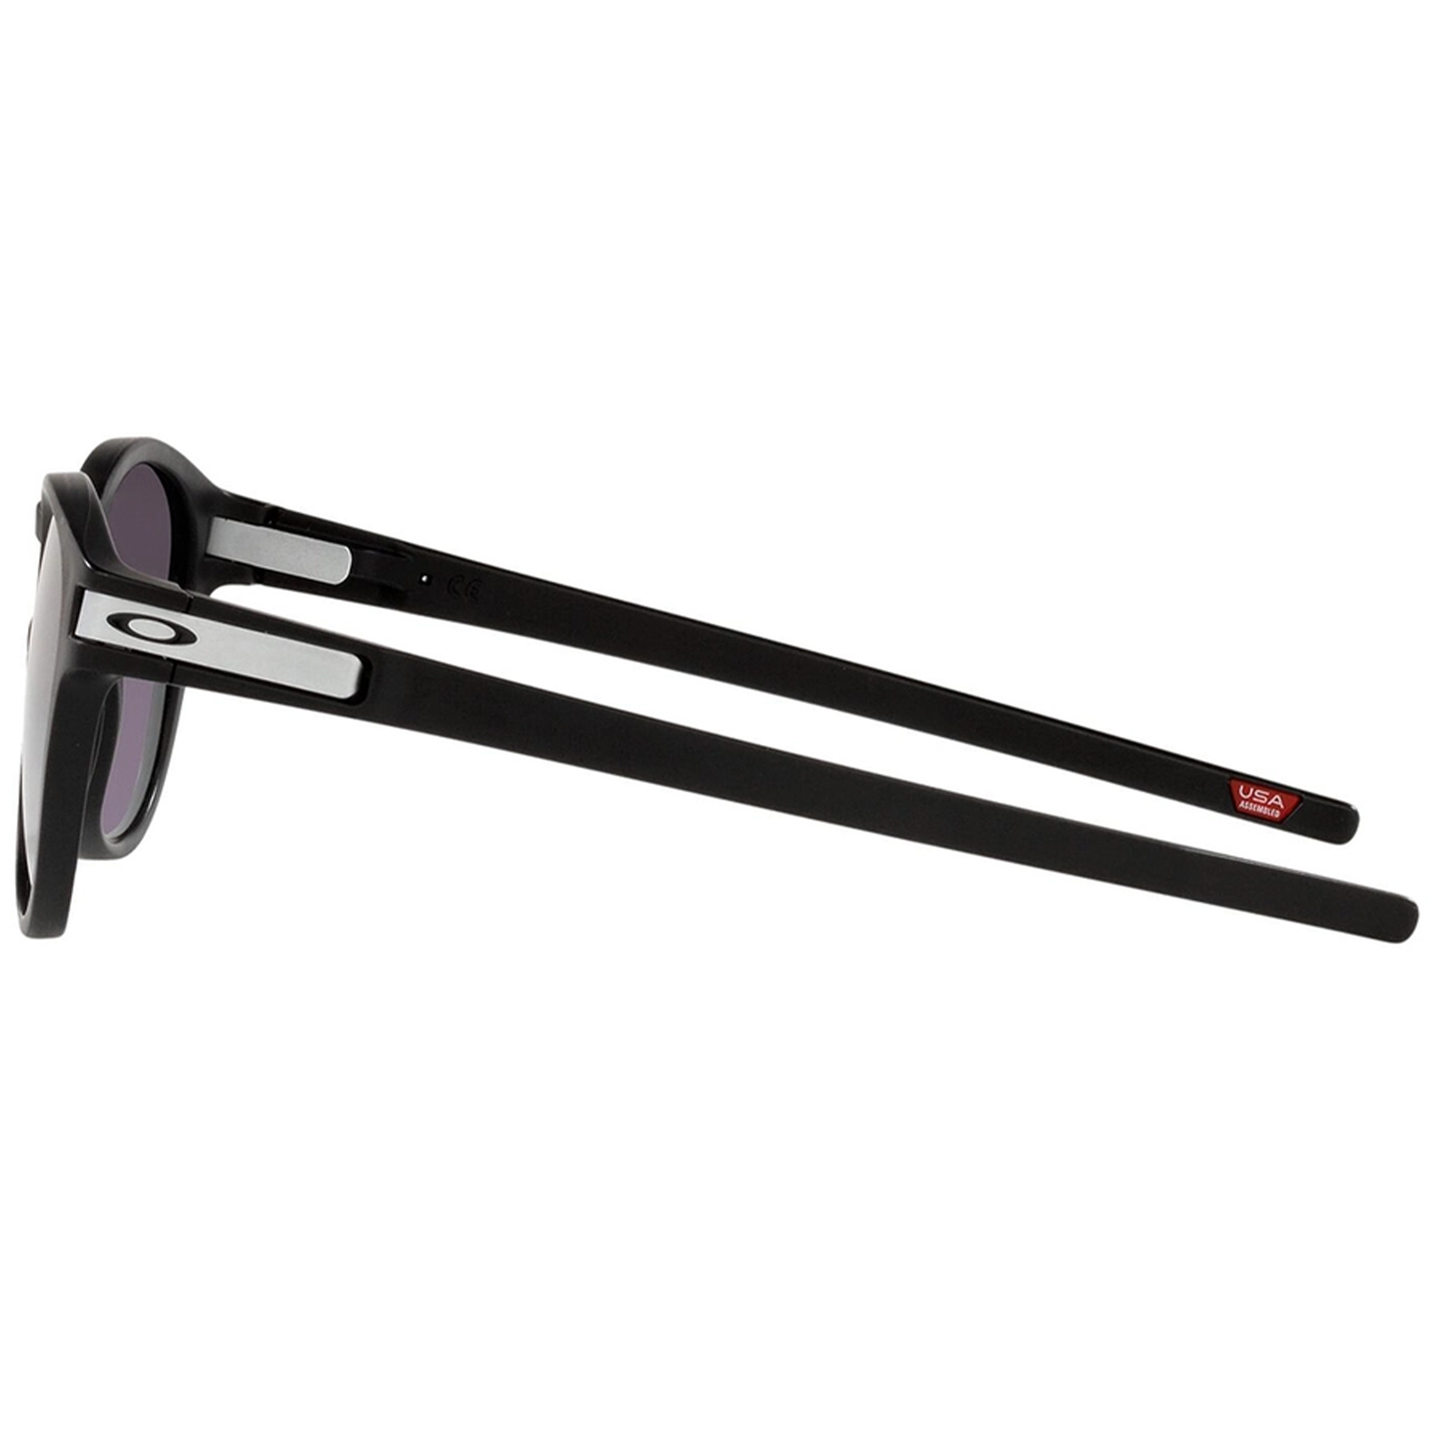 Oakley Latch Sunglasses (Matte Black) Prizm Grey Gradient Lens - Free Case